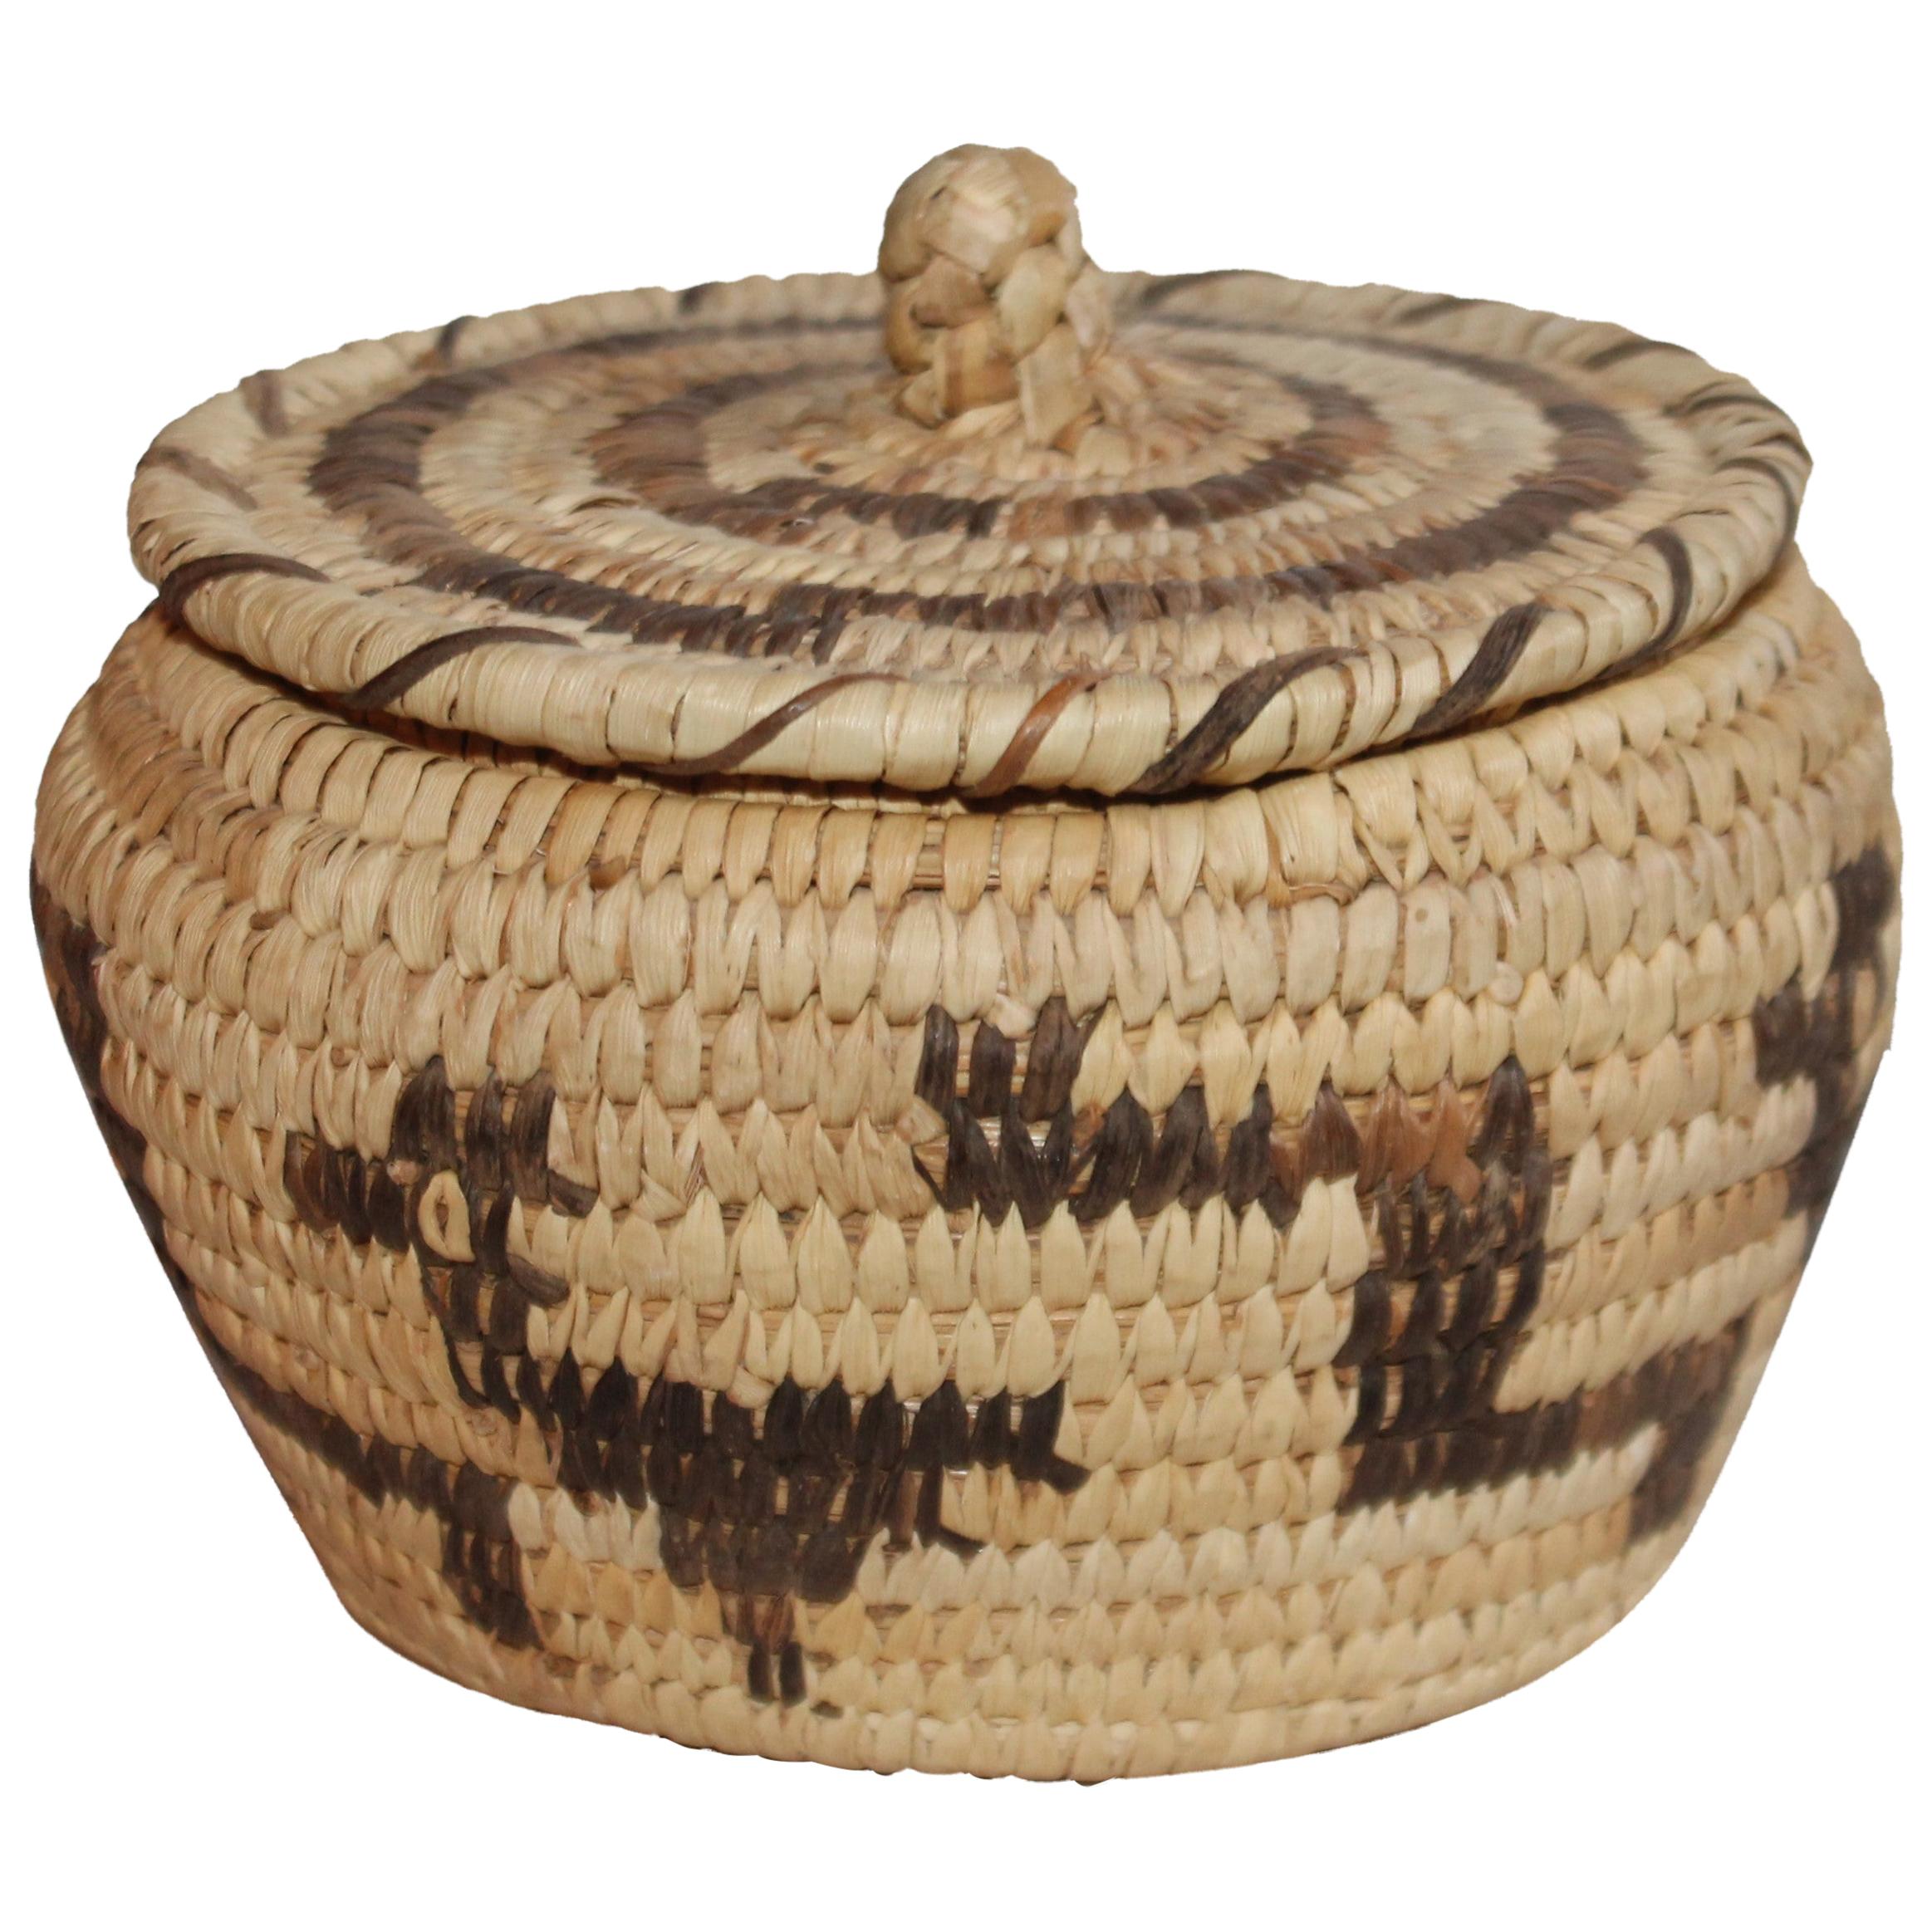 Papago Indian Lidded Basket